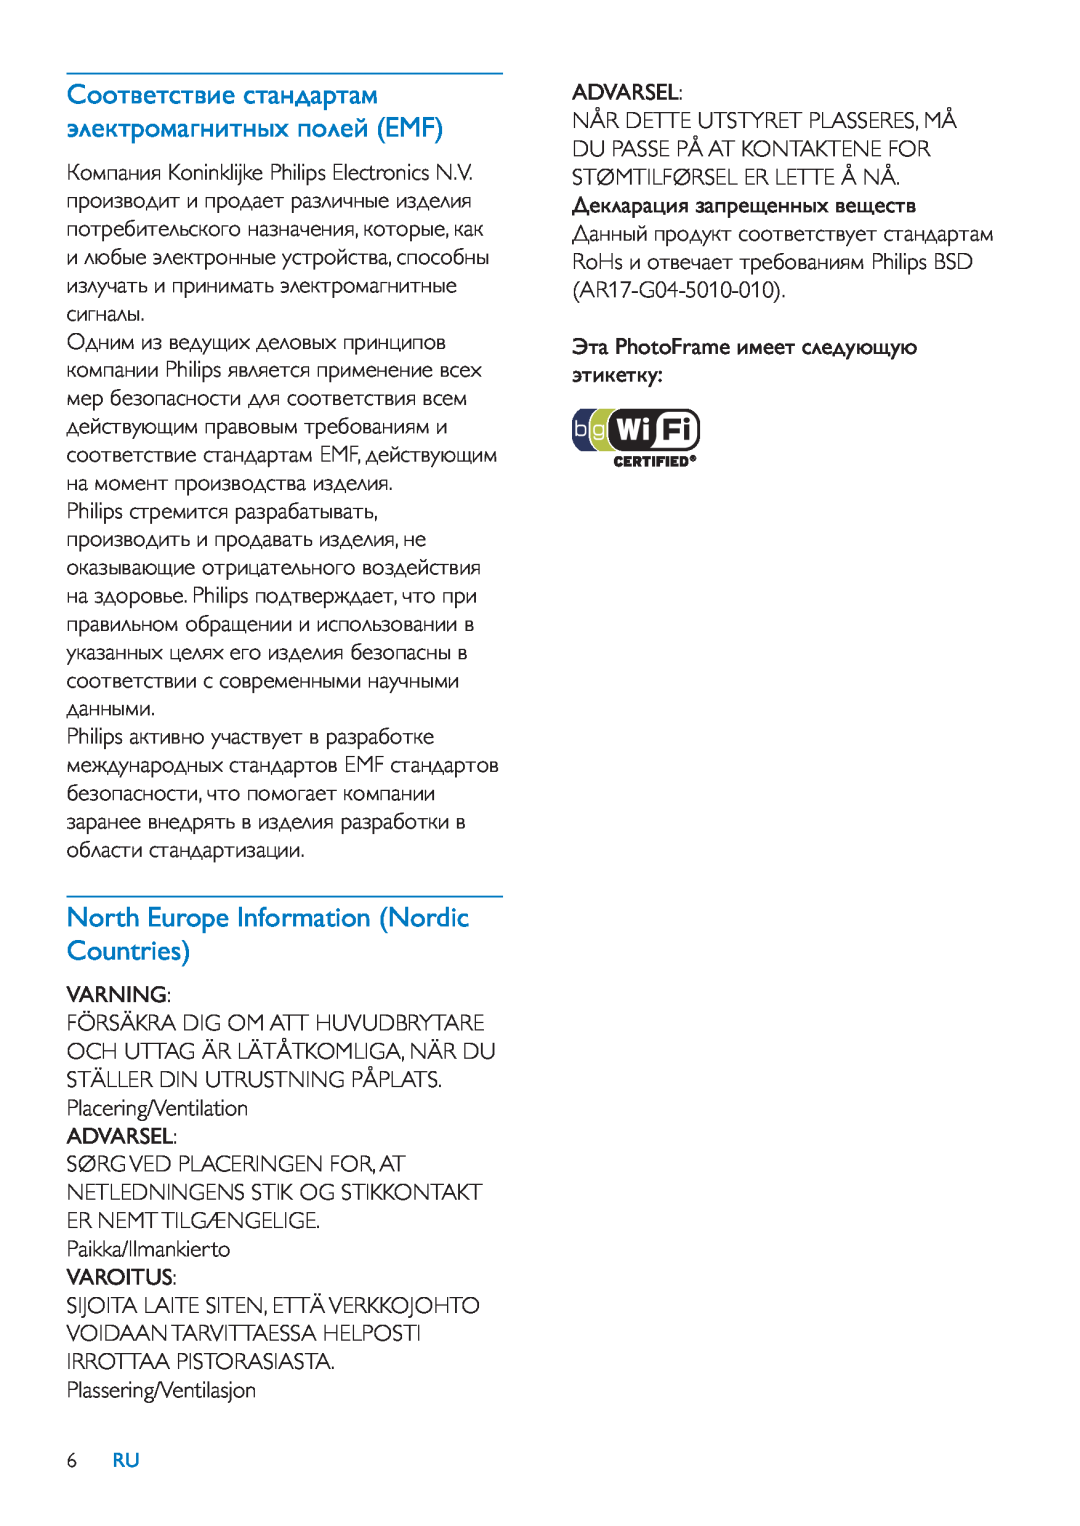 Philips 8FF3WMI North Europe Information Nordic Countries, Varning, Placering/Ventilation ADVARSEL, Varoitus, Advarsel 